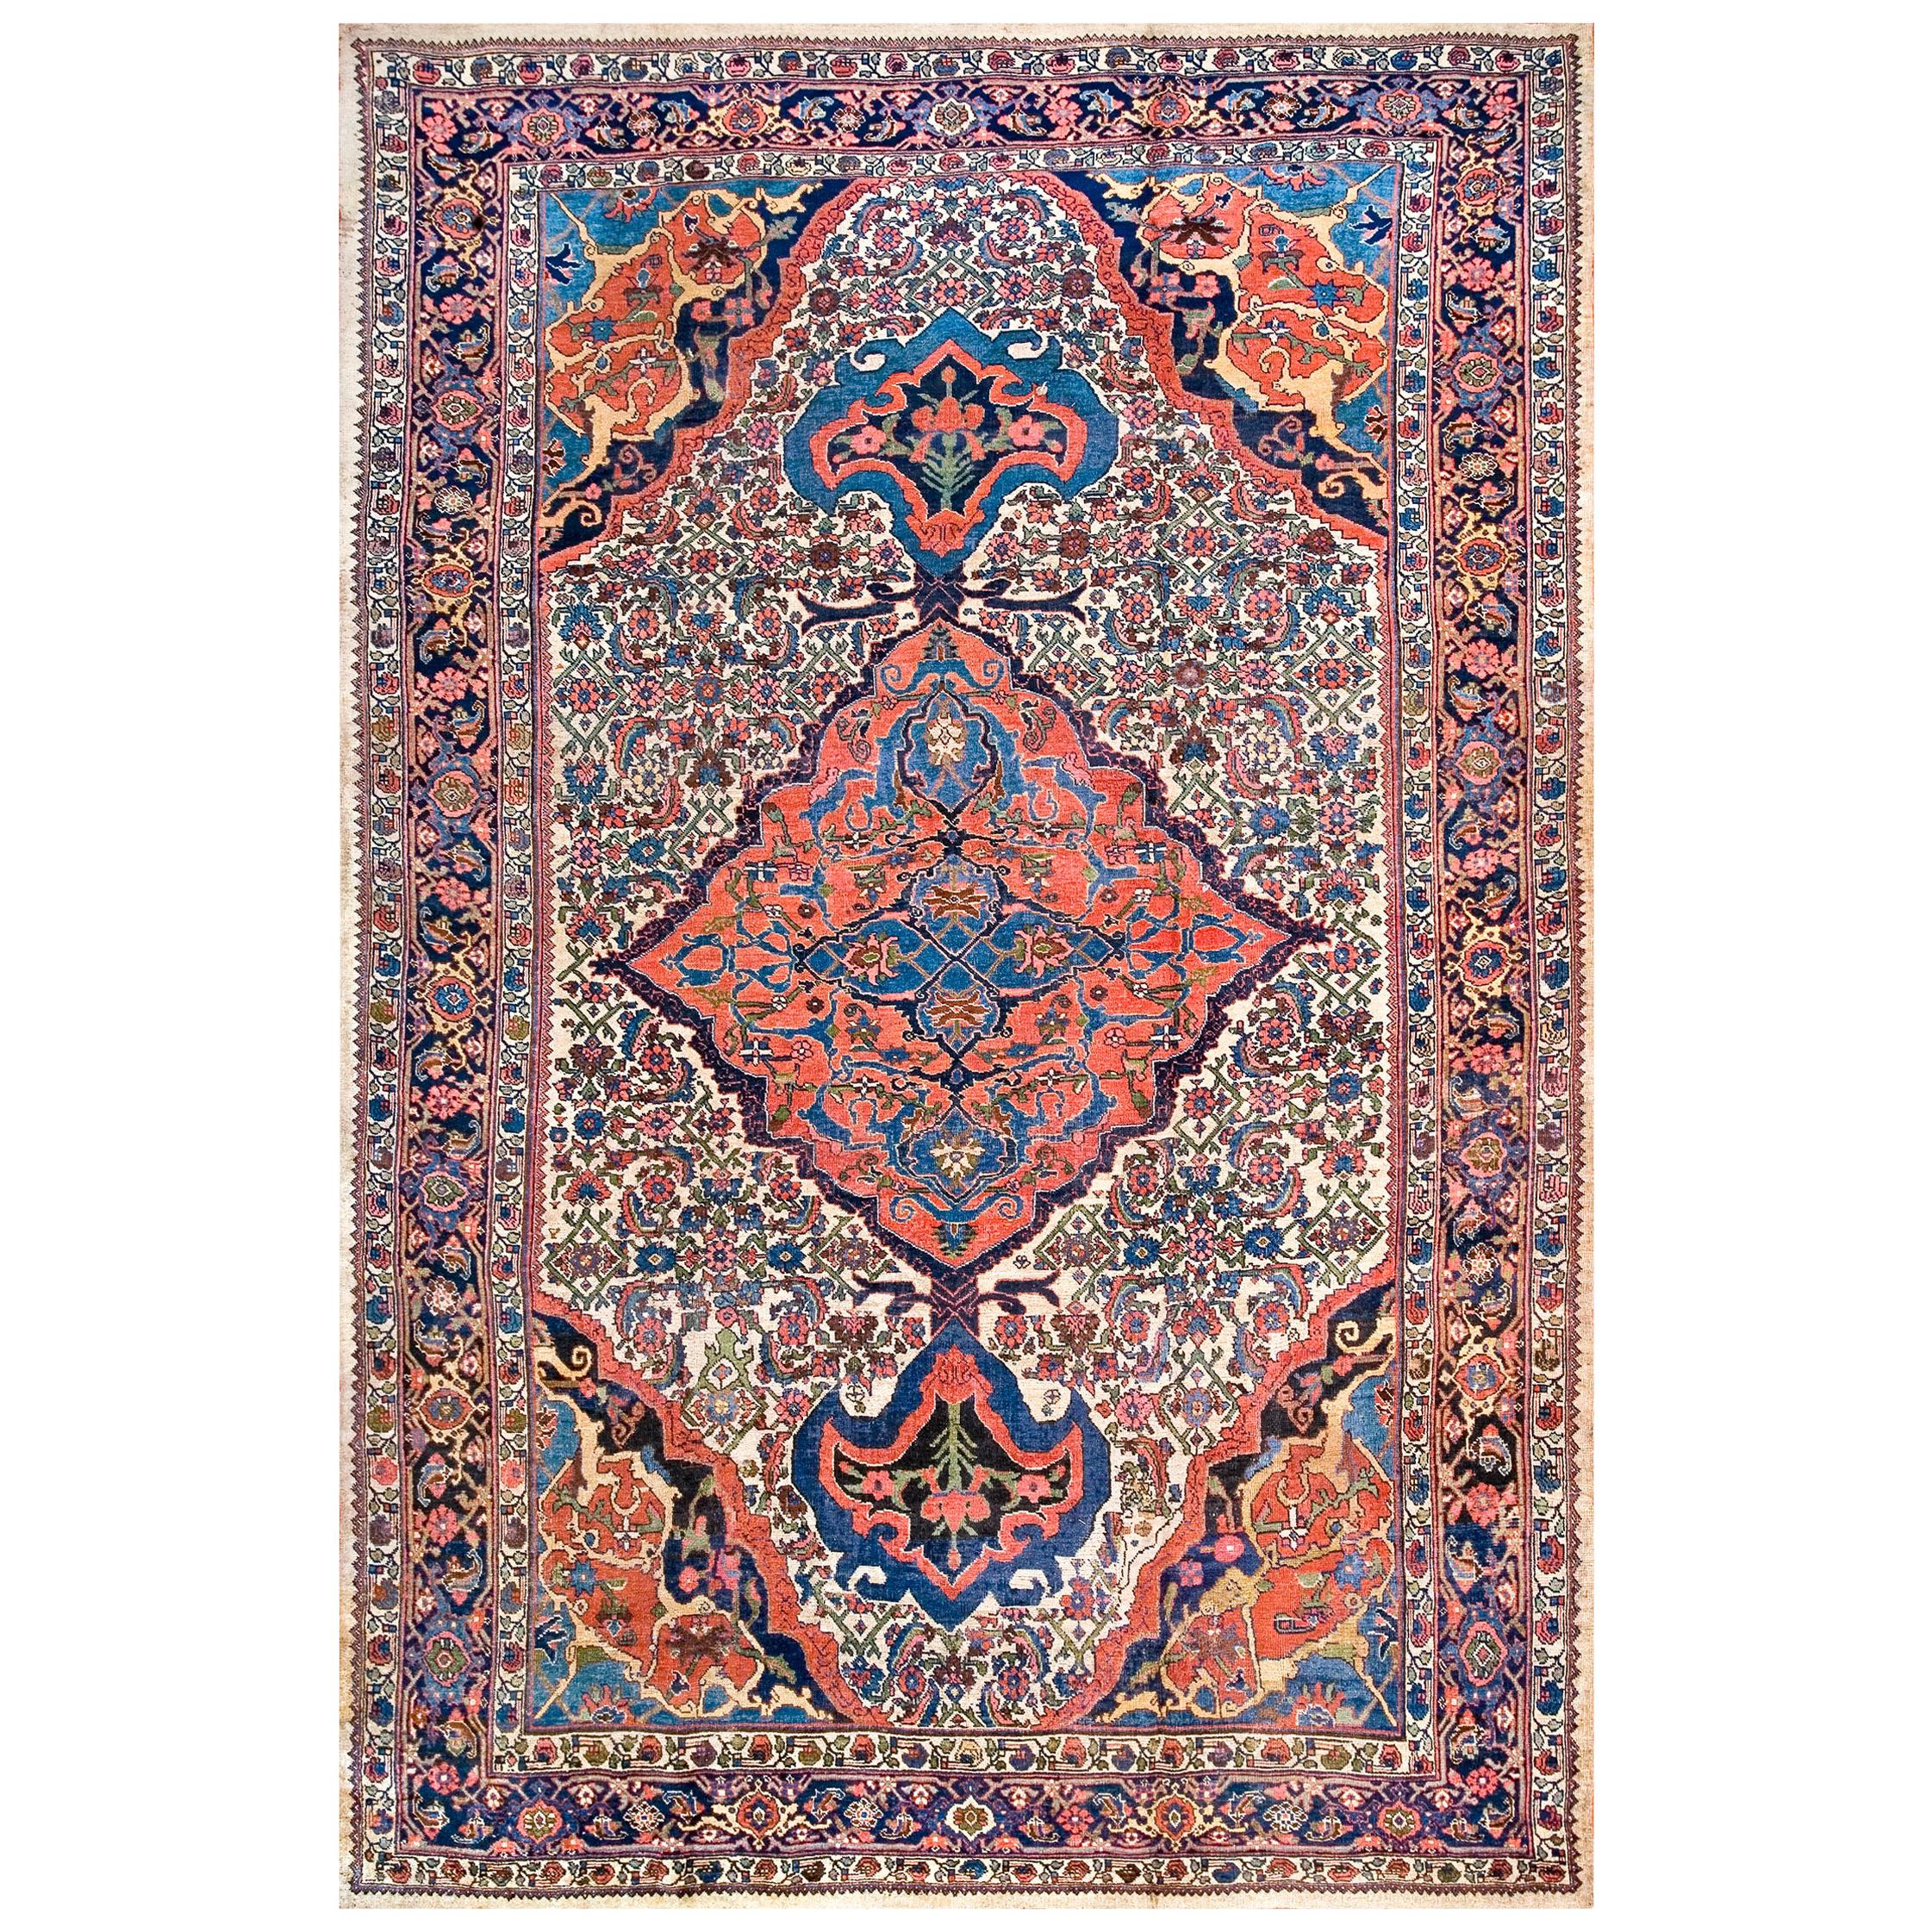 Late 19th Century Persian Bijar Carpet ( 8' x 12' - 245 x 365 )